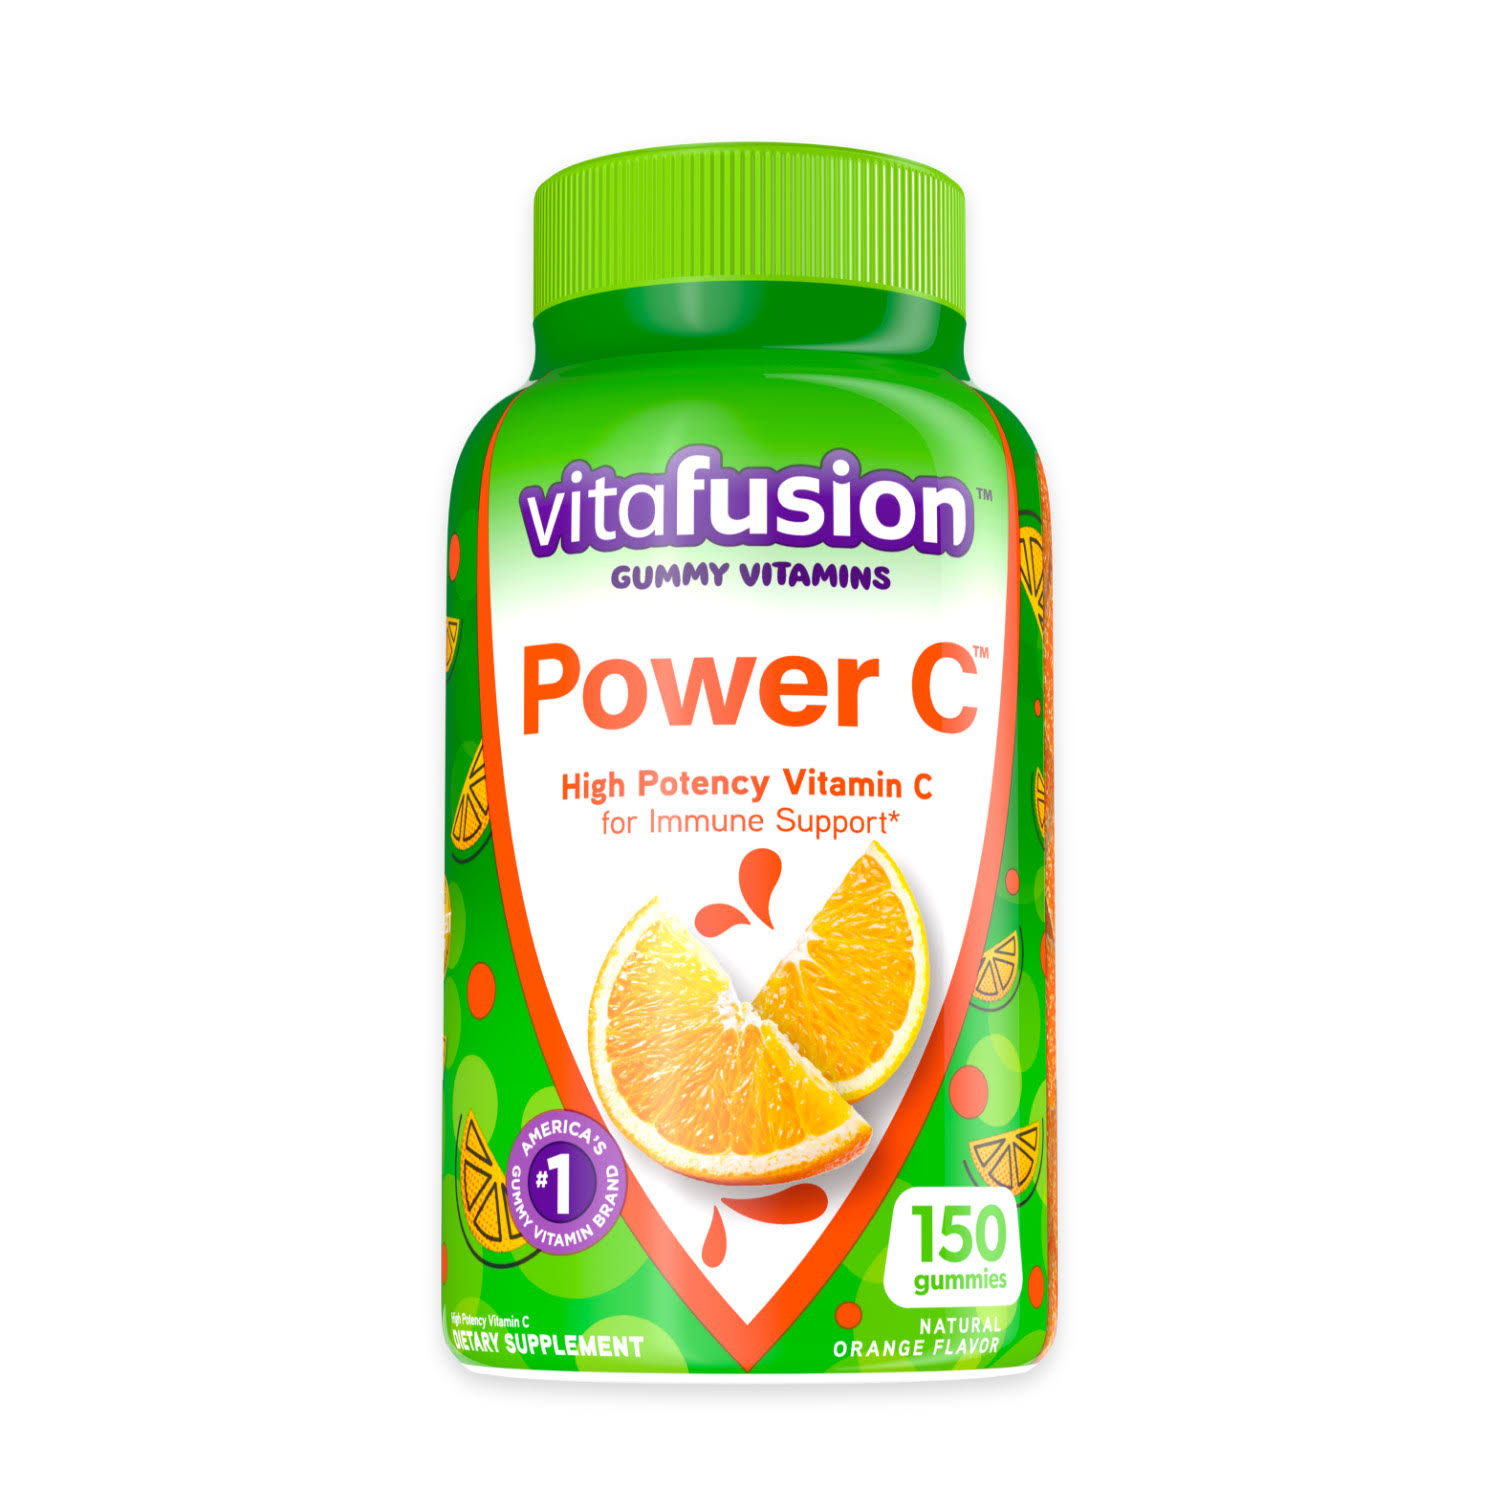 Vitafusion Power C Adult Vitamins Supplement - Natural Orange Flavor,150 Gummies